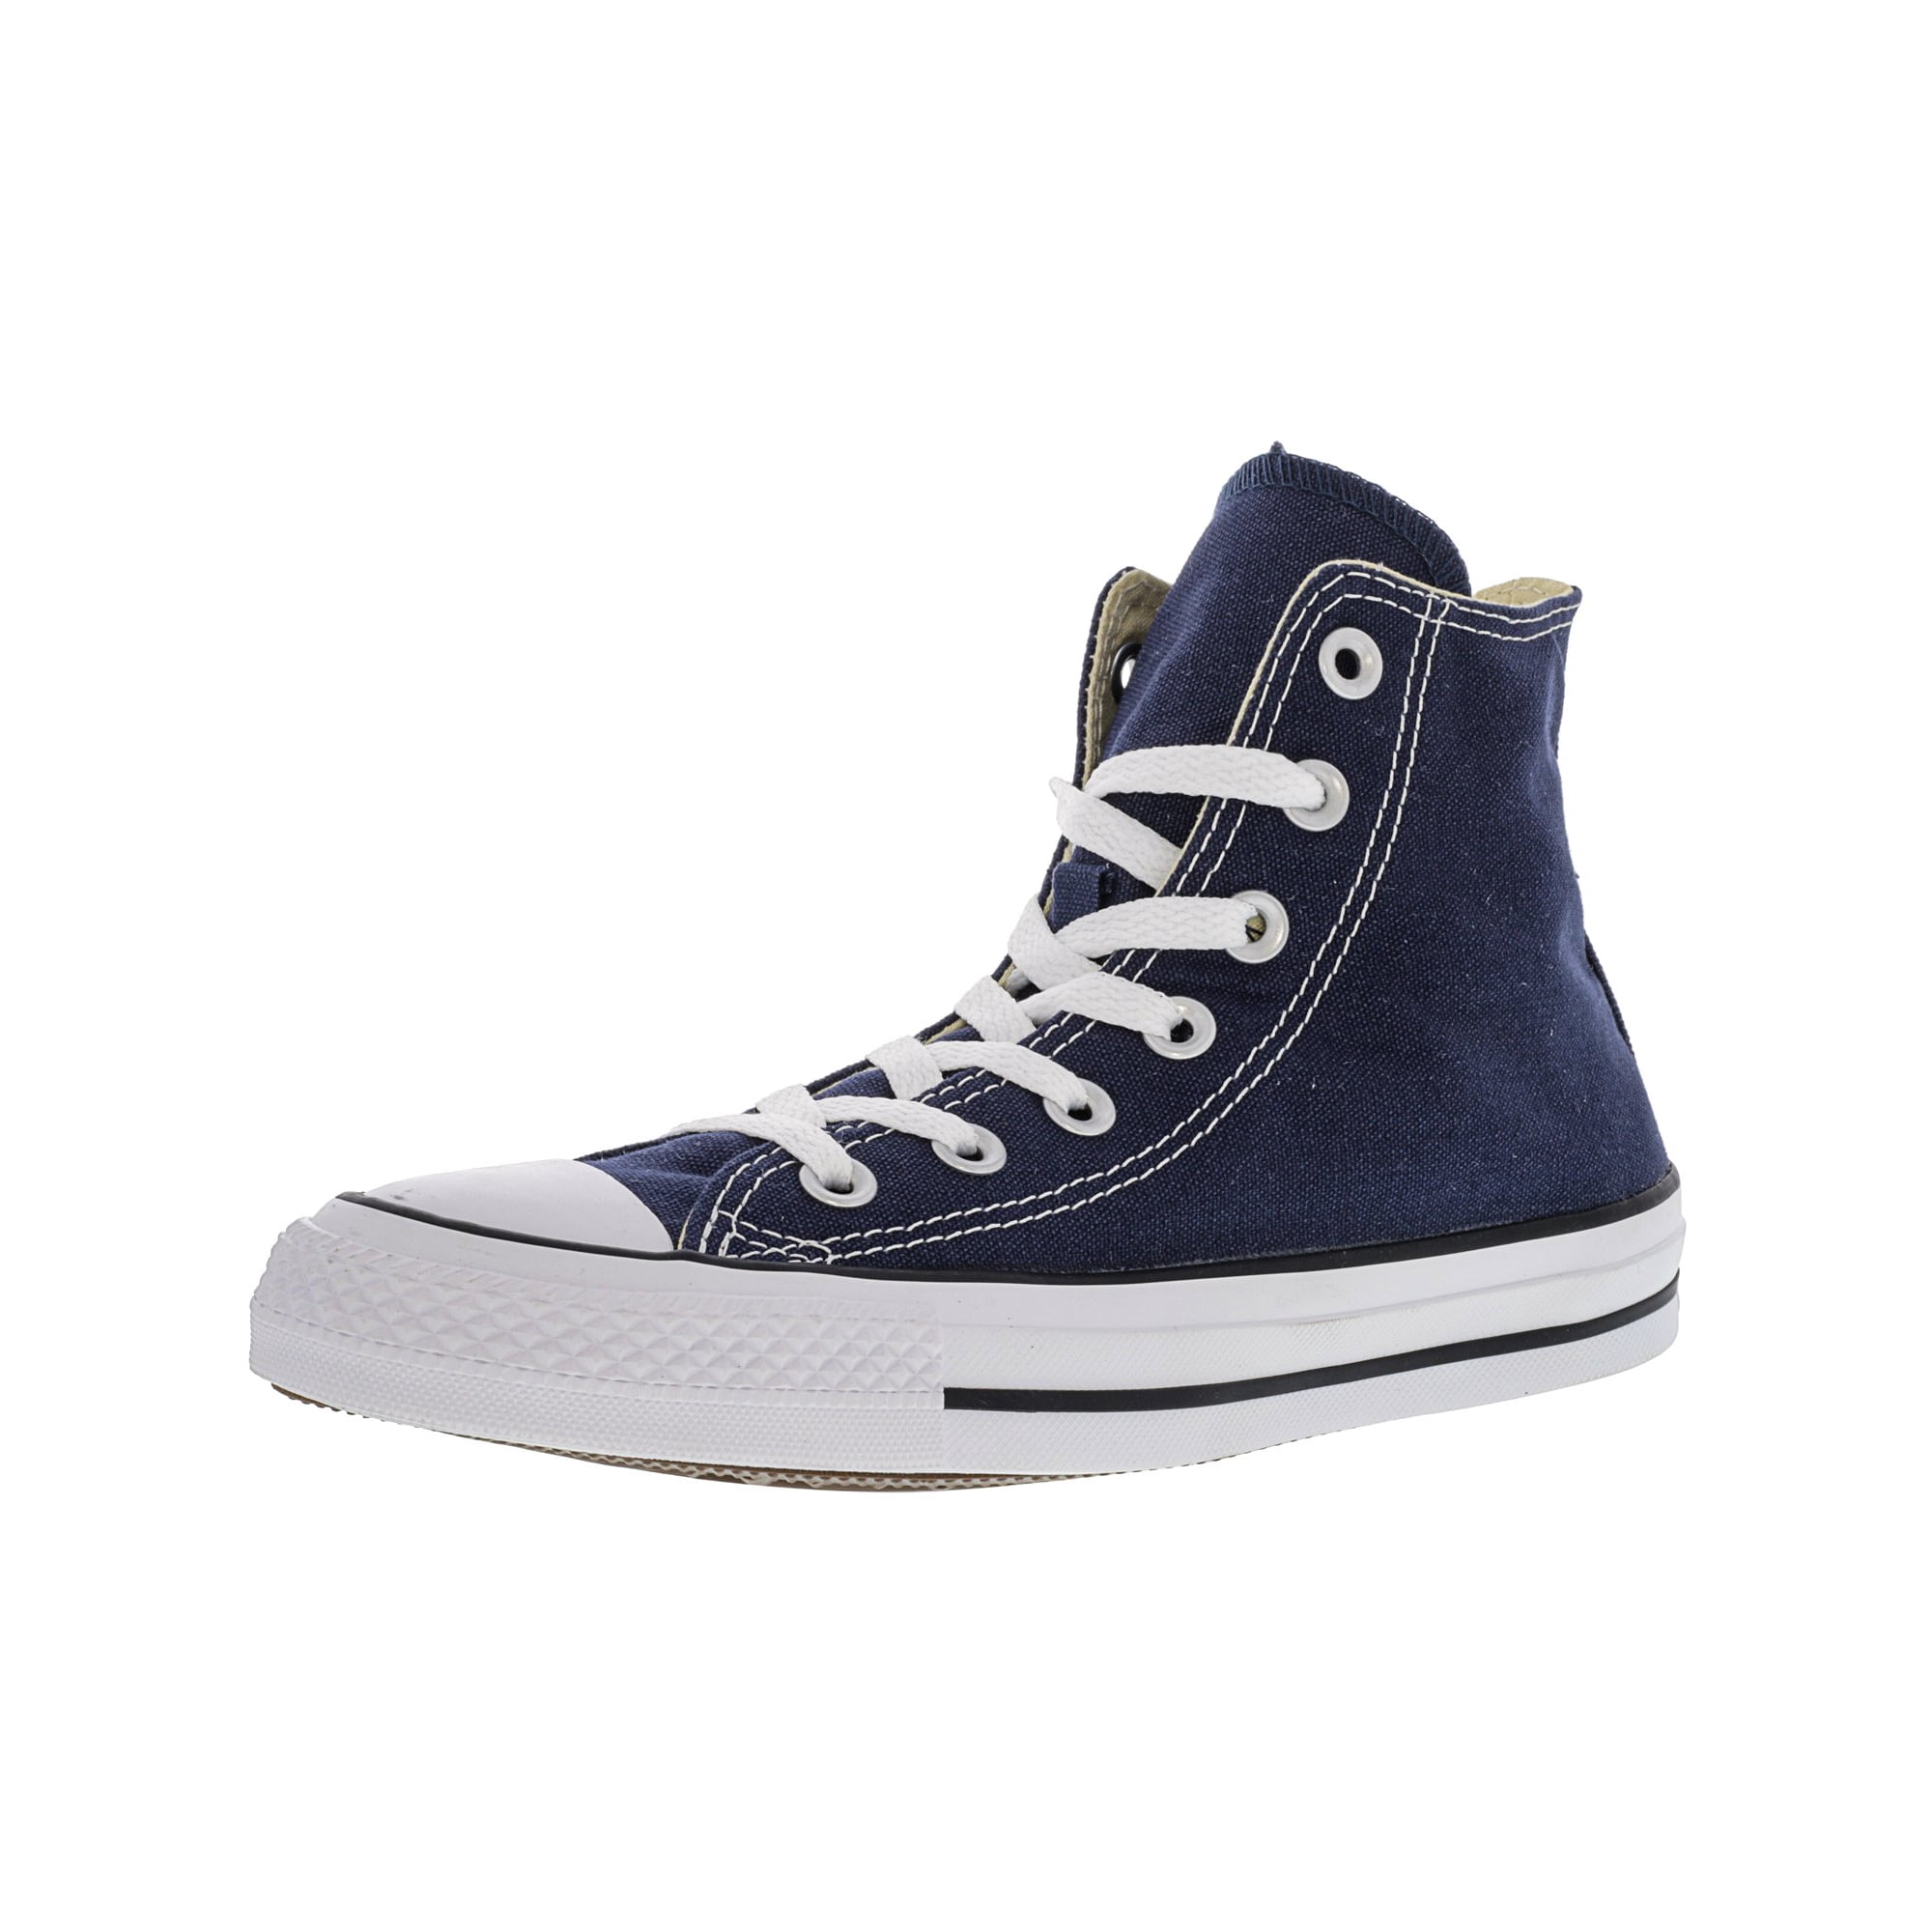 Converse Chuck Taylor All Star Hi Navy High-Top Fashion Sneaker - 8M / 6M |  Walmart Canada